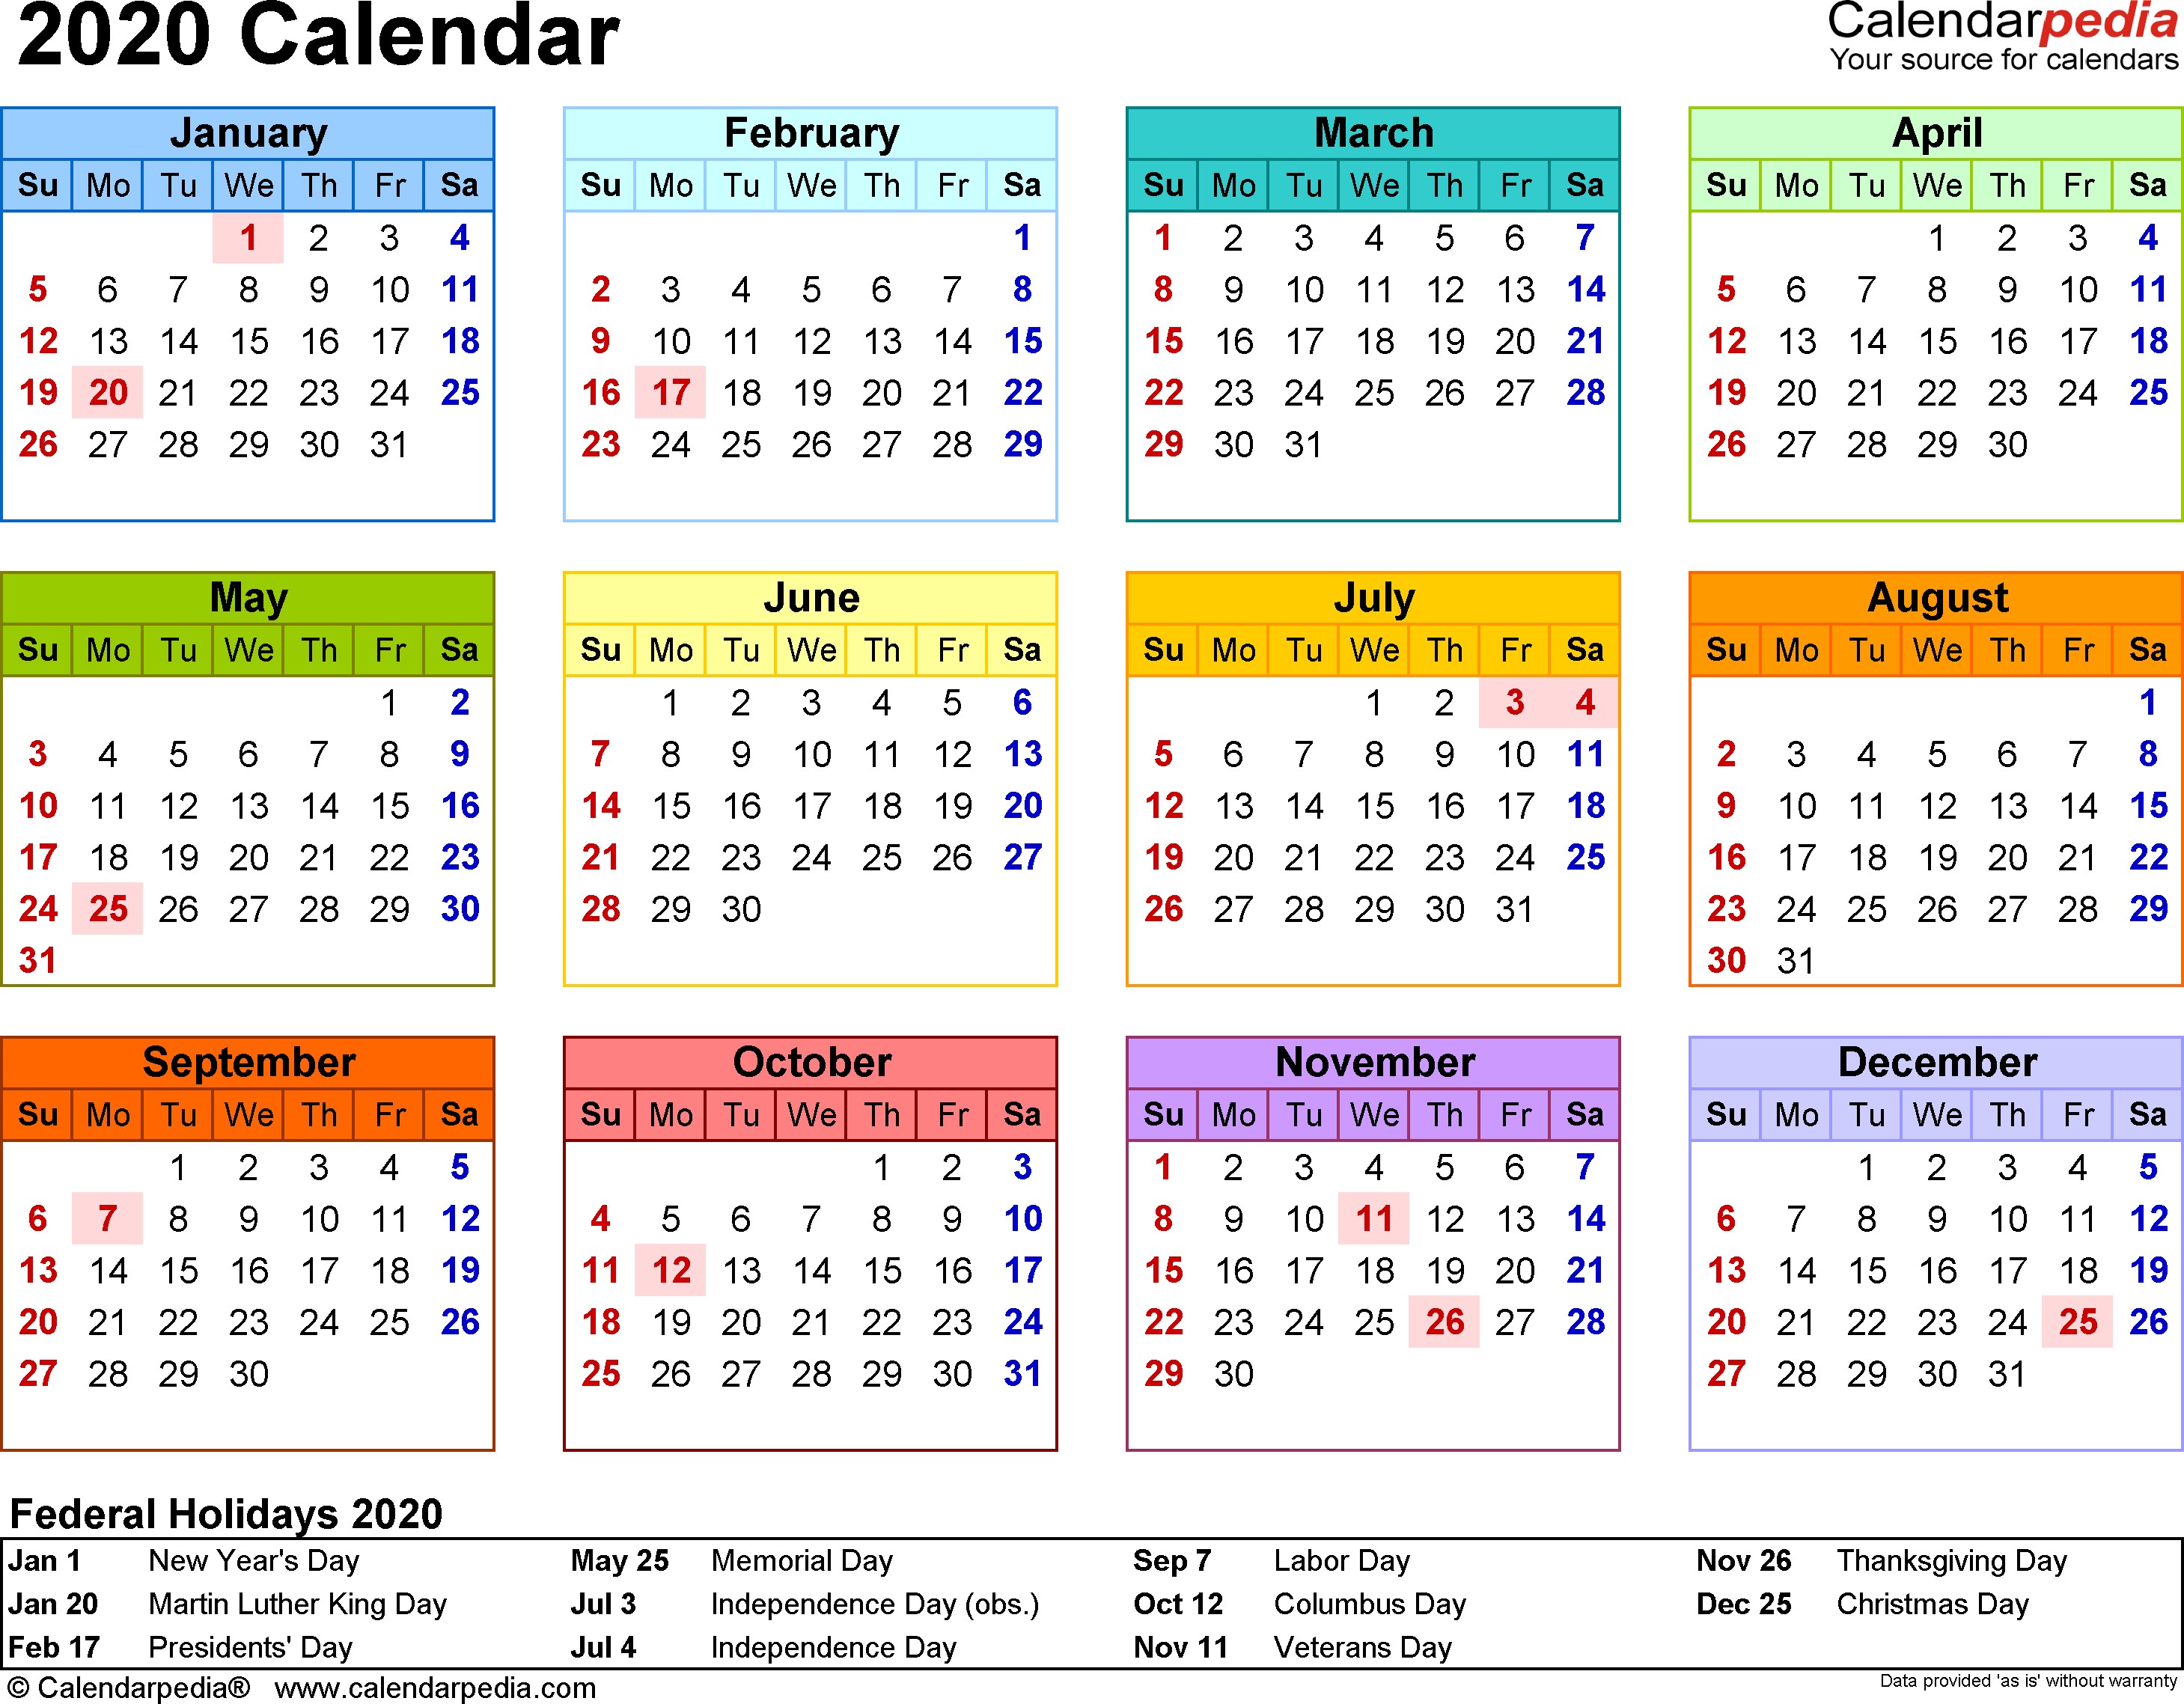 2020 Calendar PDF 17 free printable calendar templates